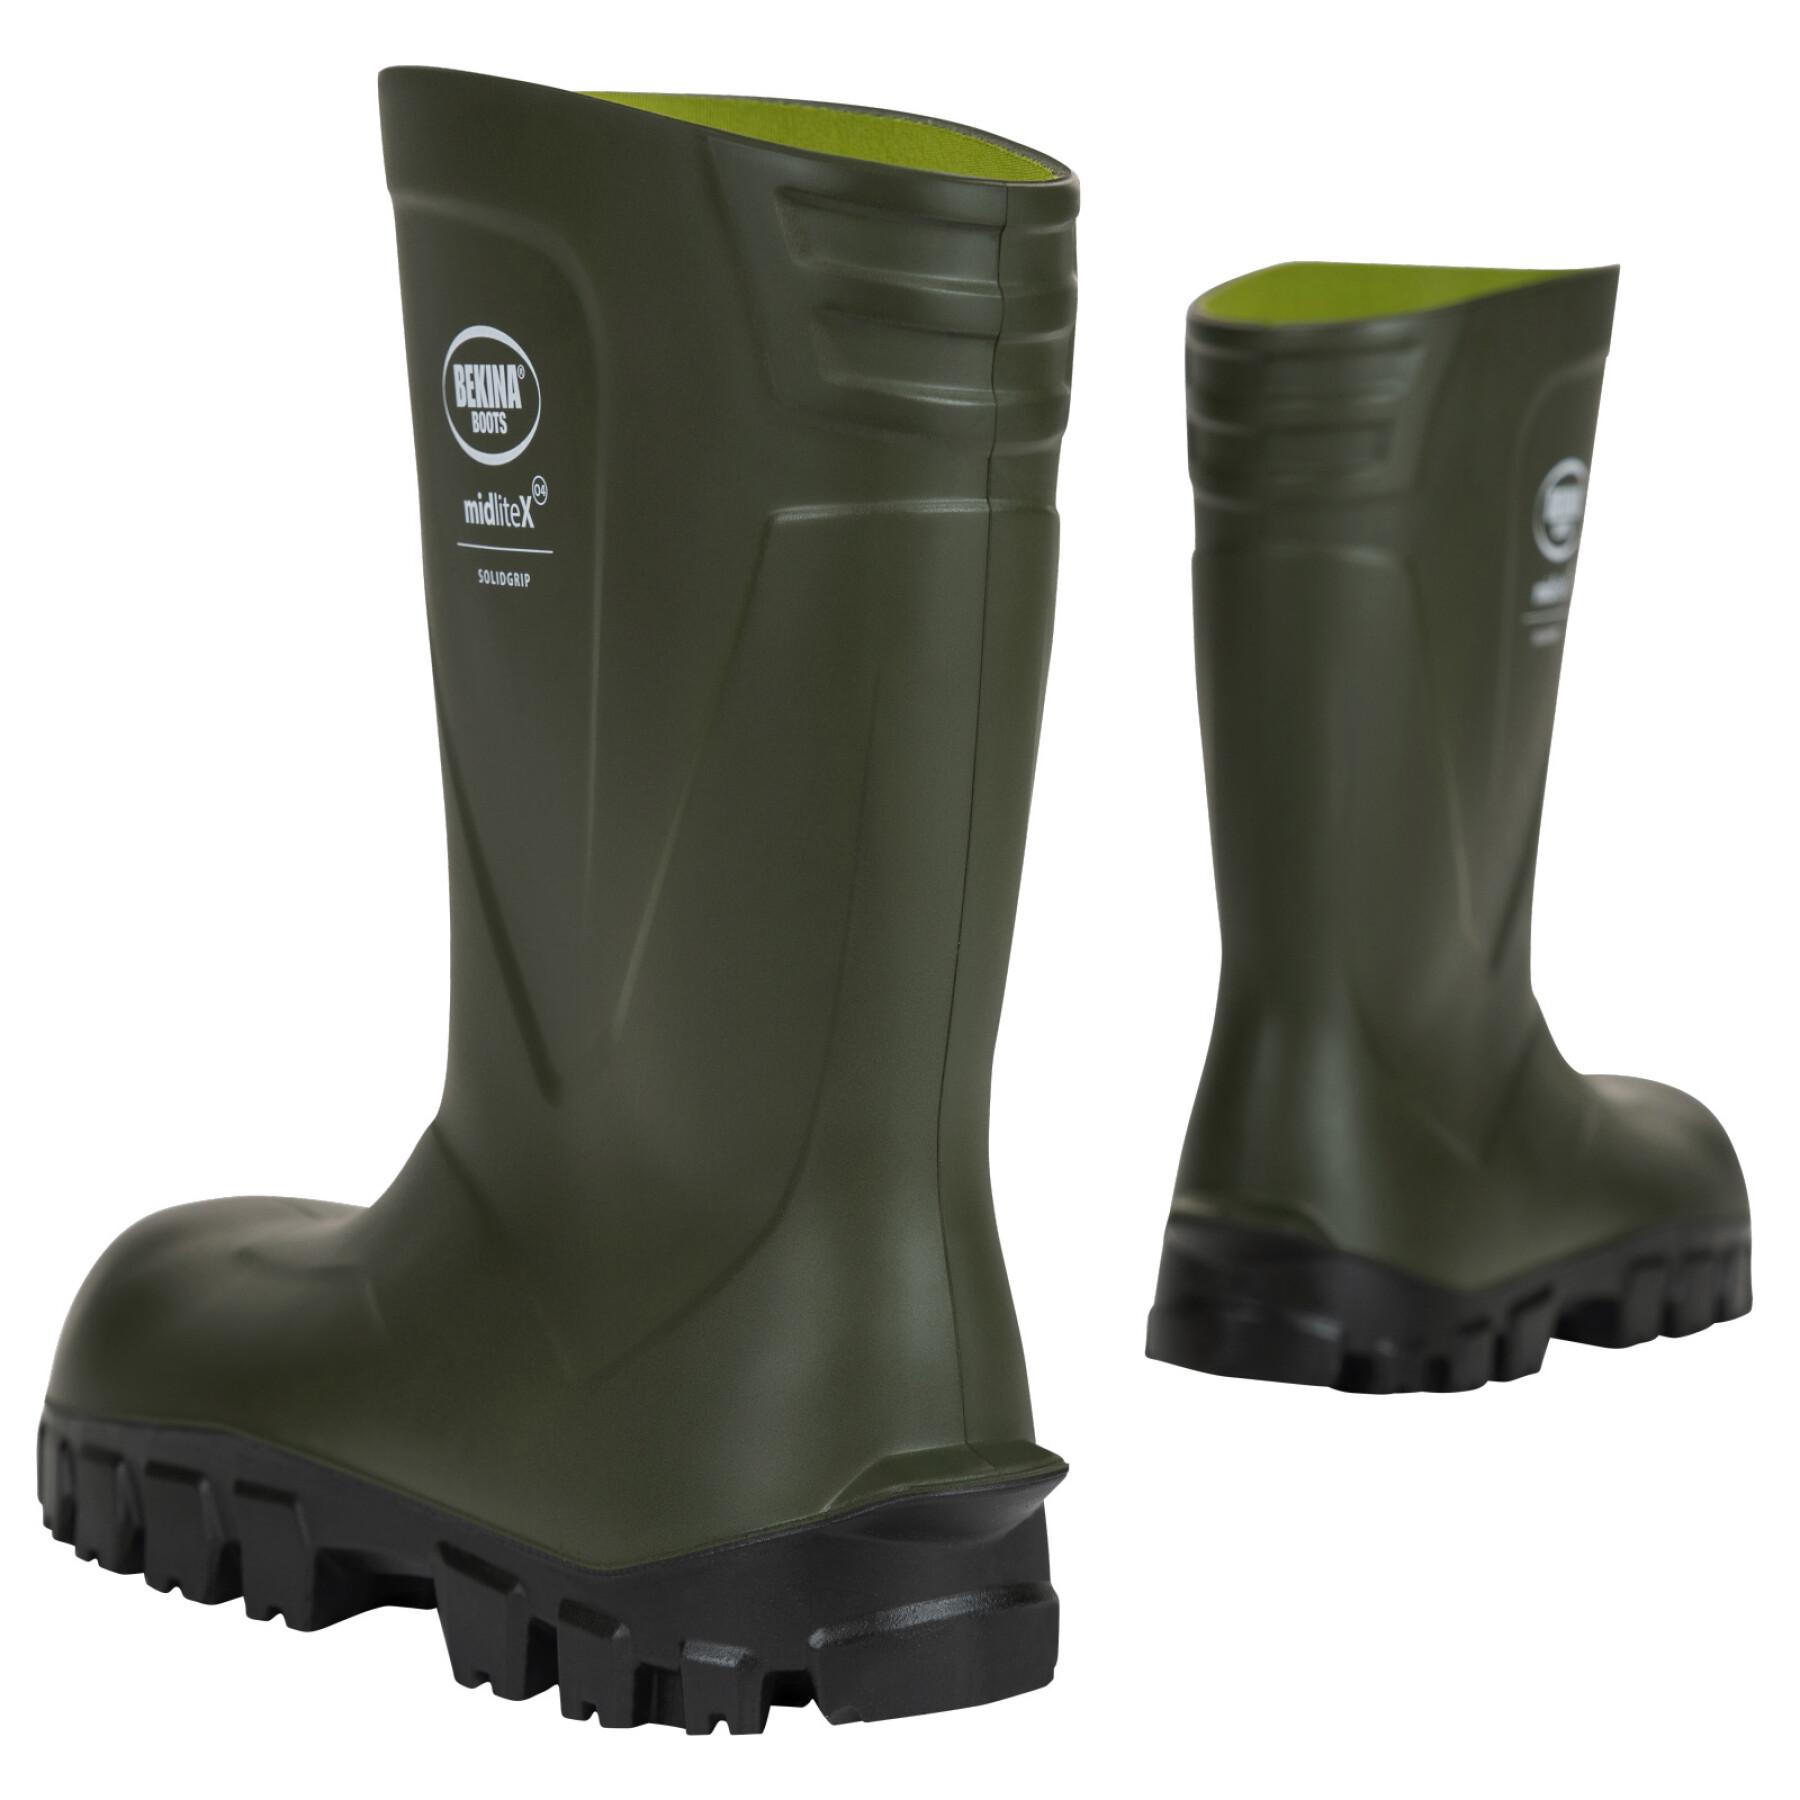 Safety boots Bekina S5 MidliteX Solidgrip